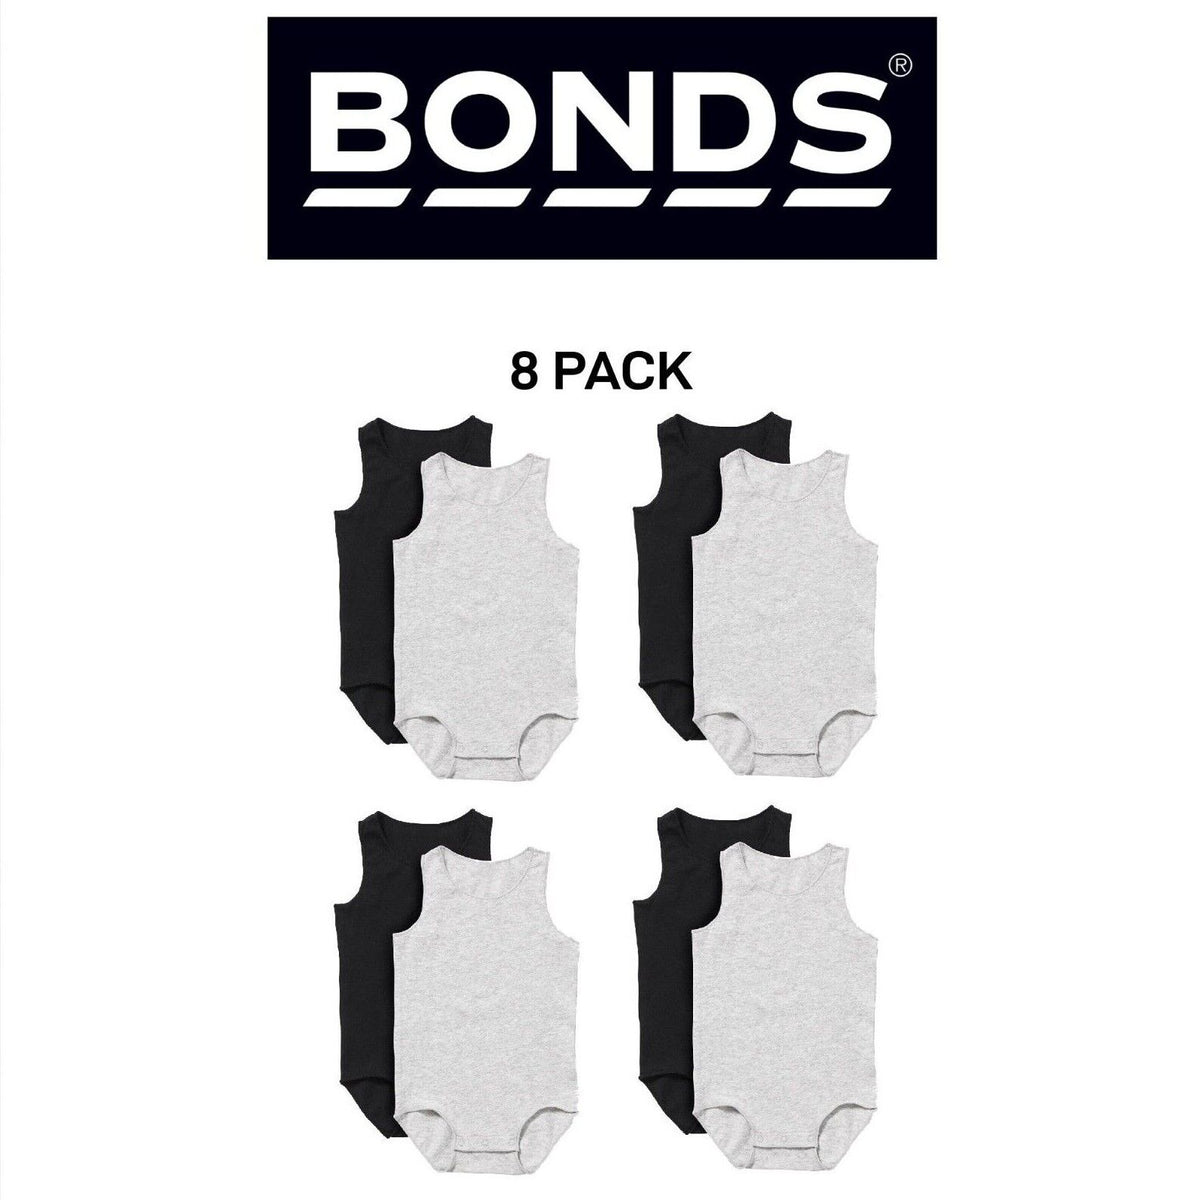 Bonds Baby Wonderbodies Singlet Suit Super Stretchy Cotton Fabric 8 Pack BXW6A